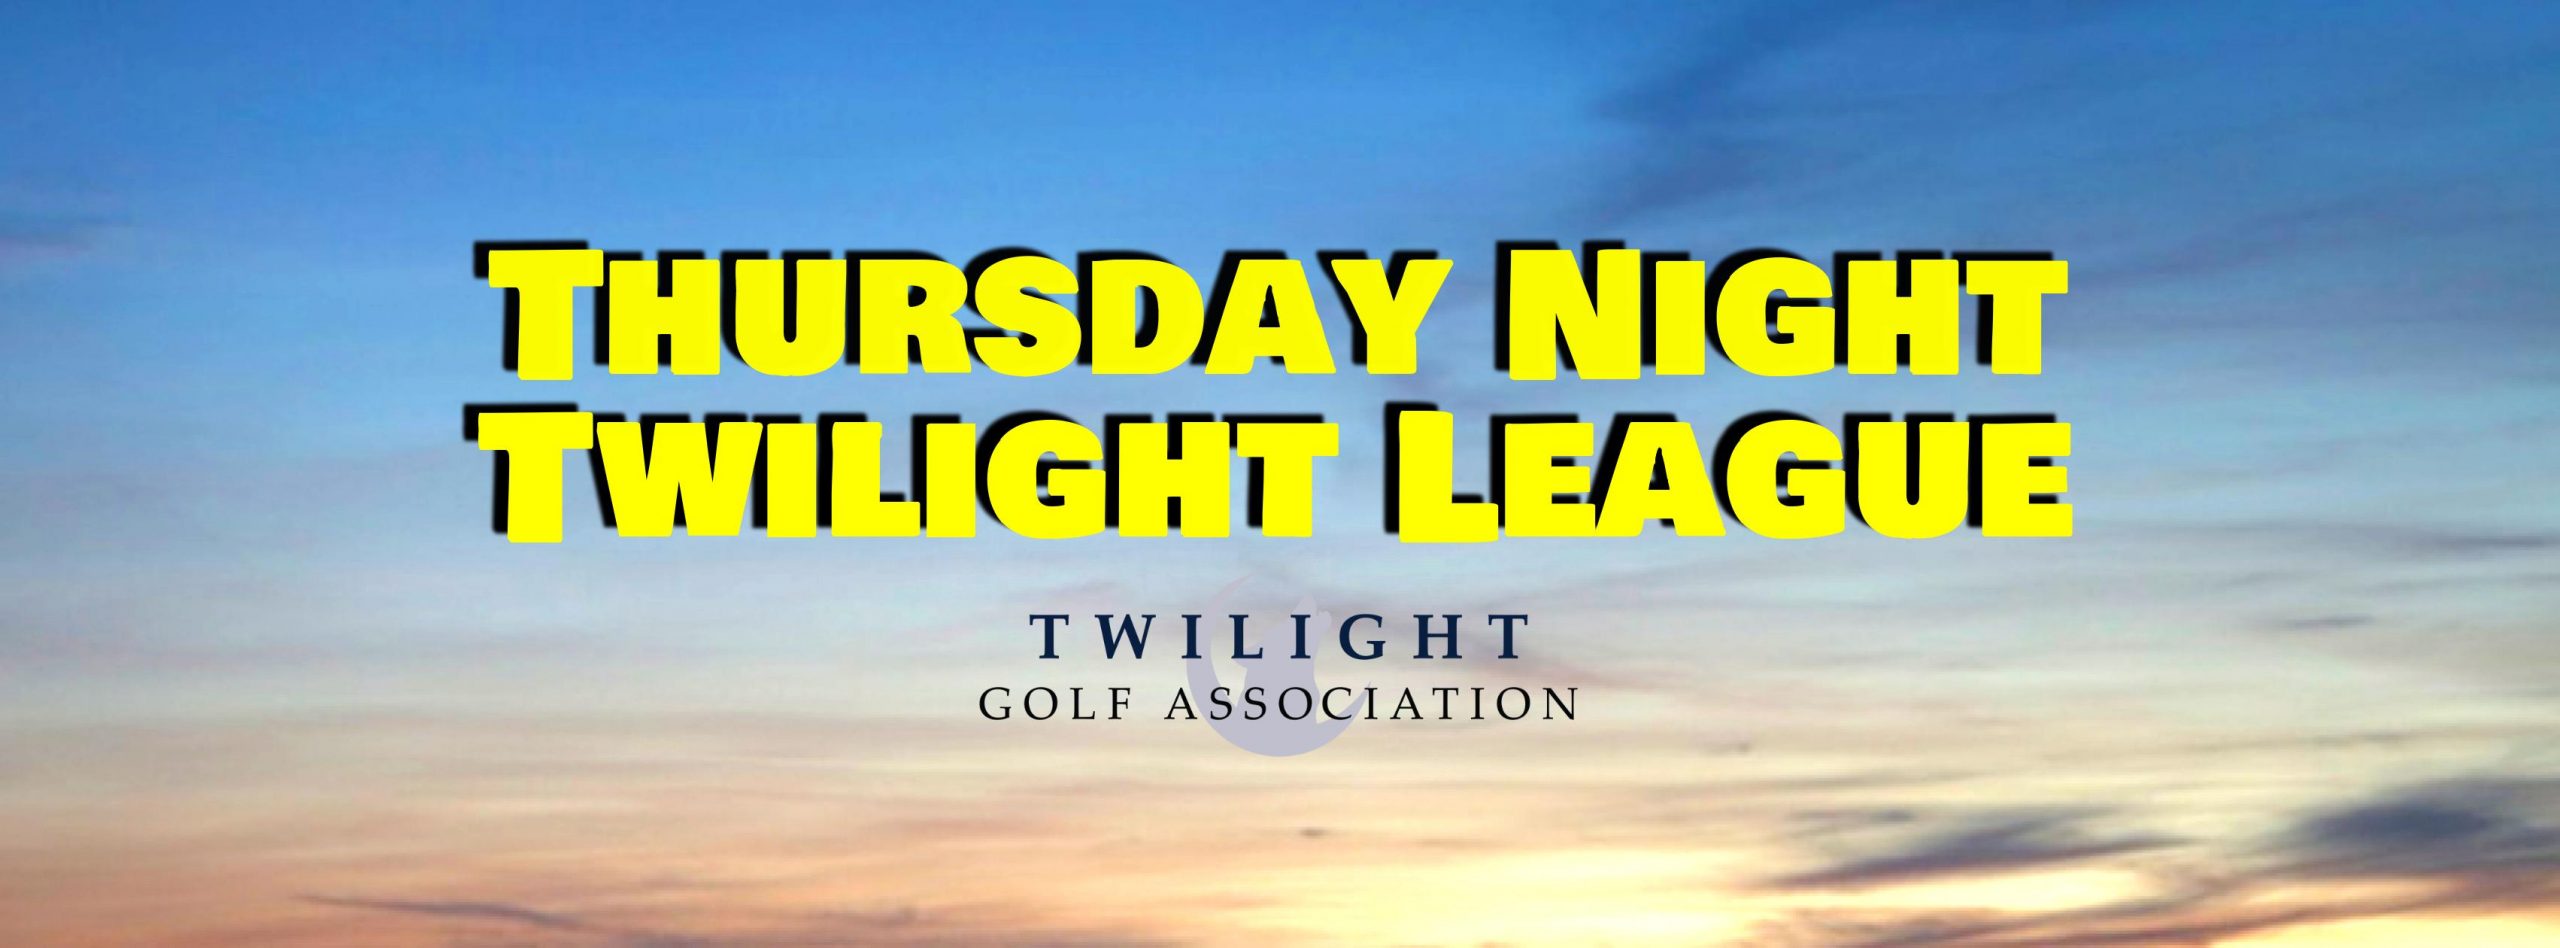 Thursday Night Twilight League at Golden Pheasant Golf Club